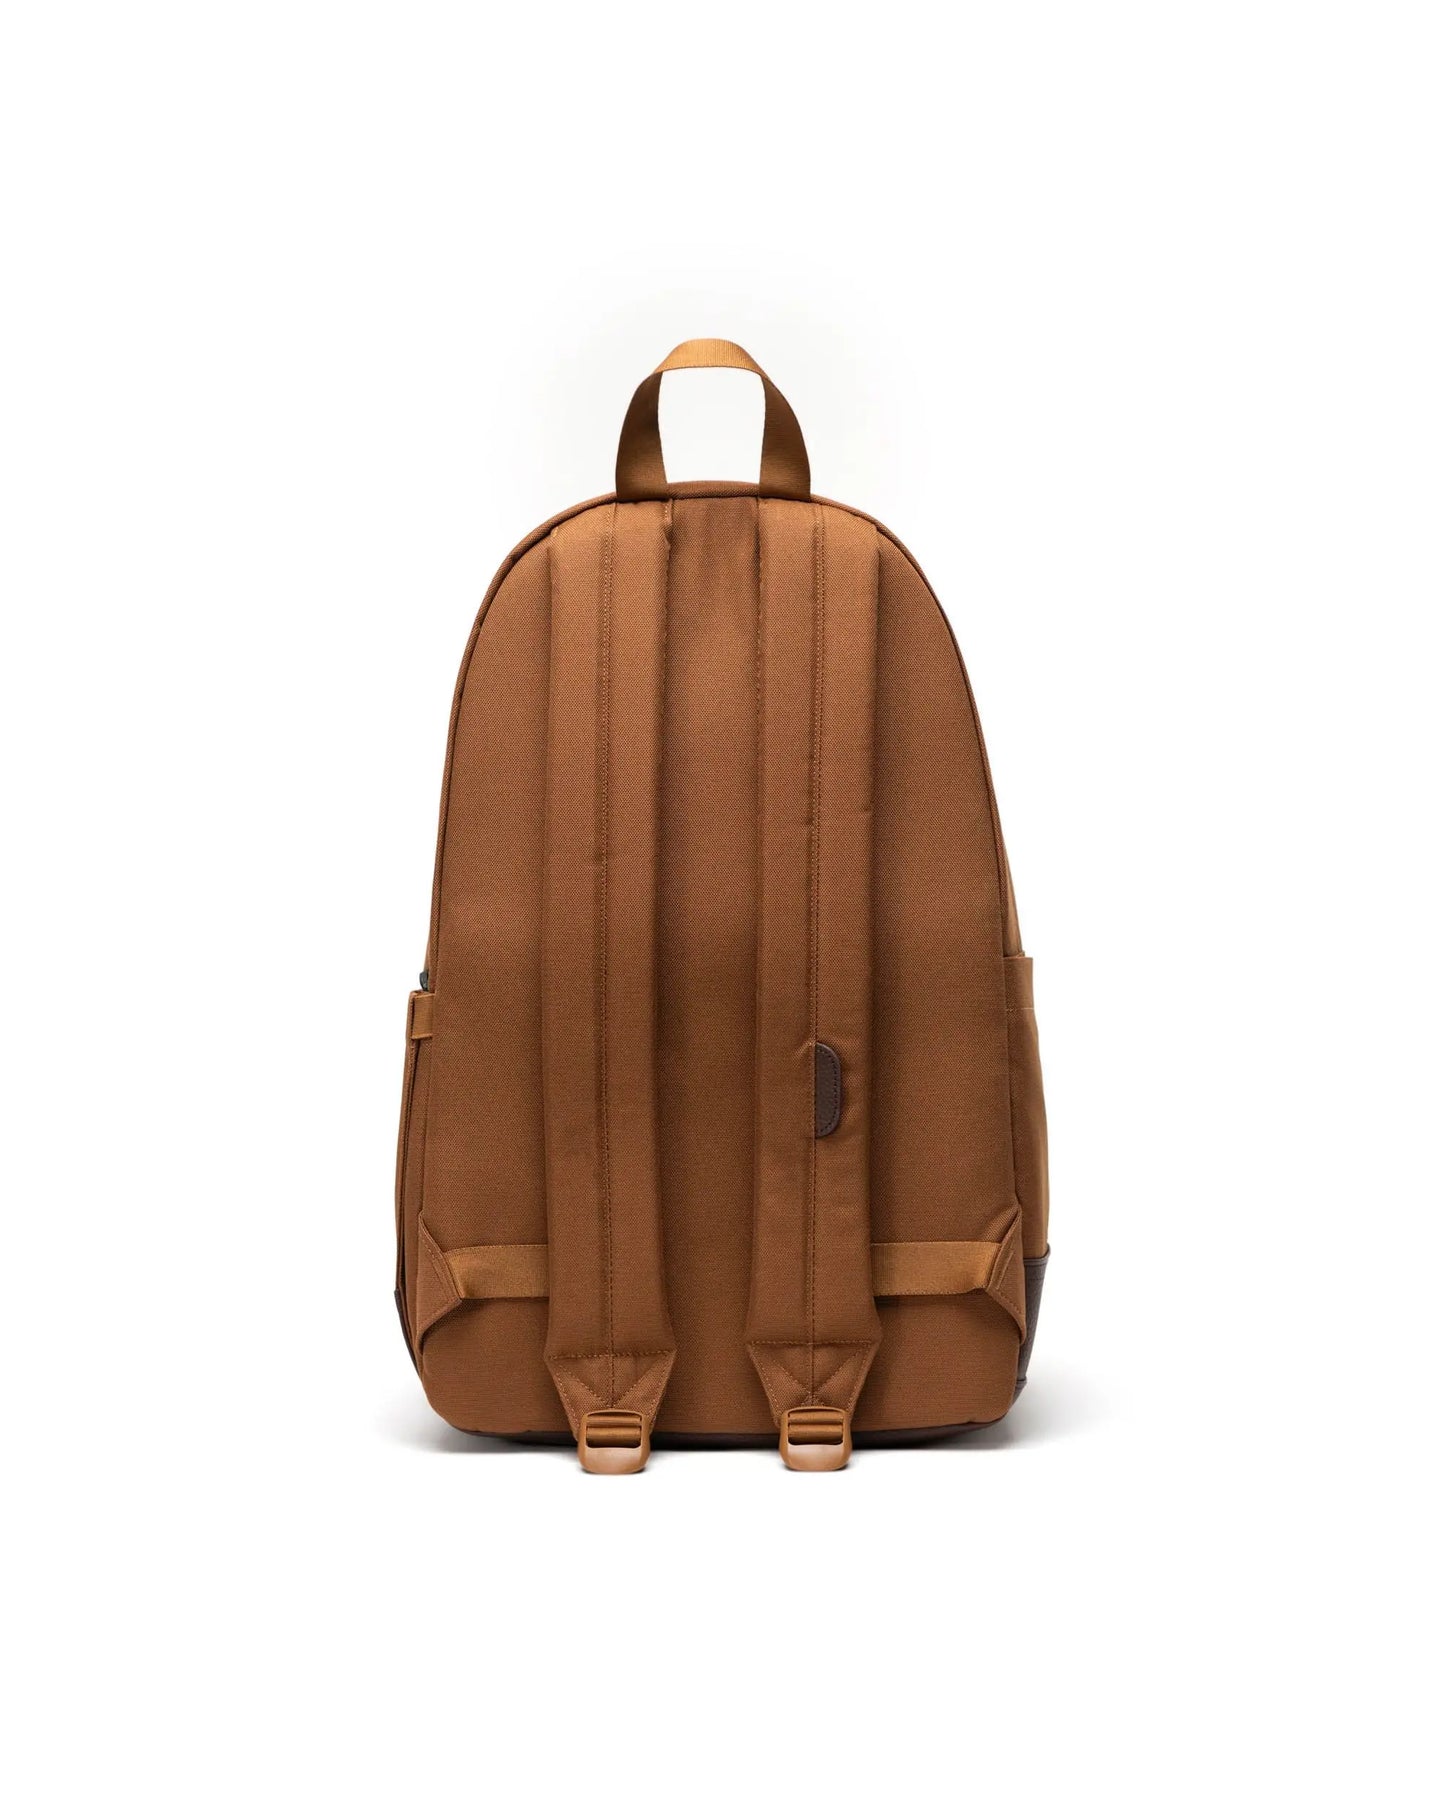 Herschel Heritage Backpack - Rubber/Chicory Coffee